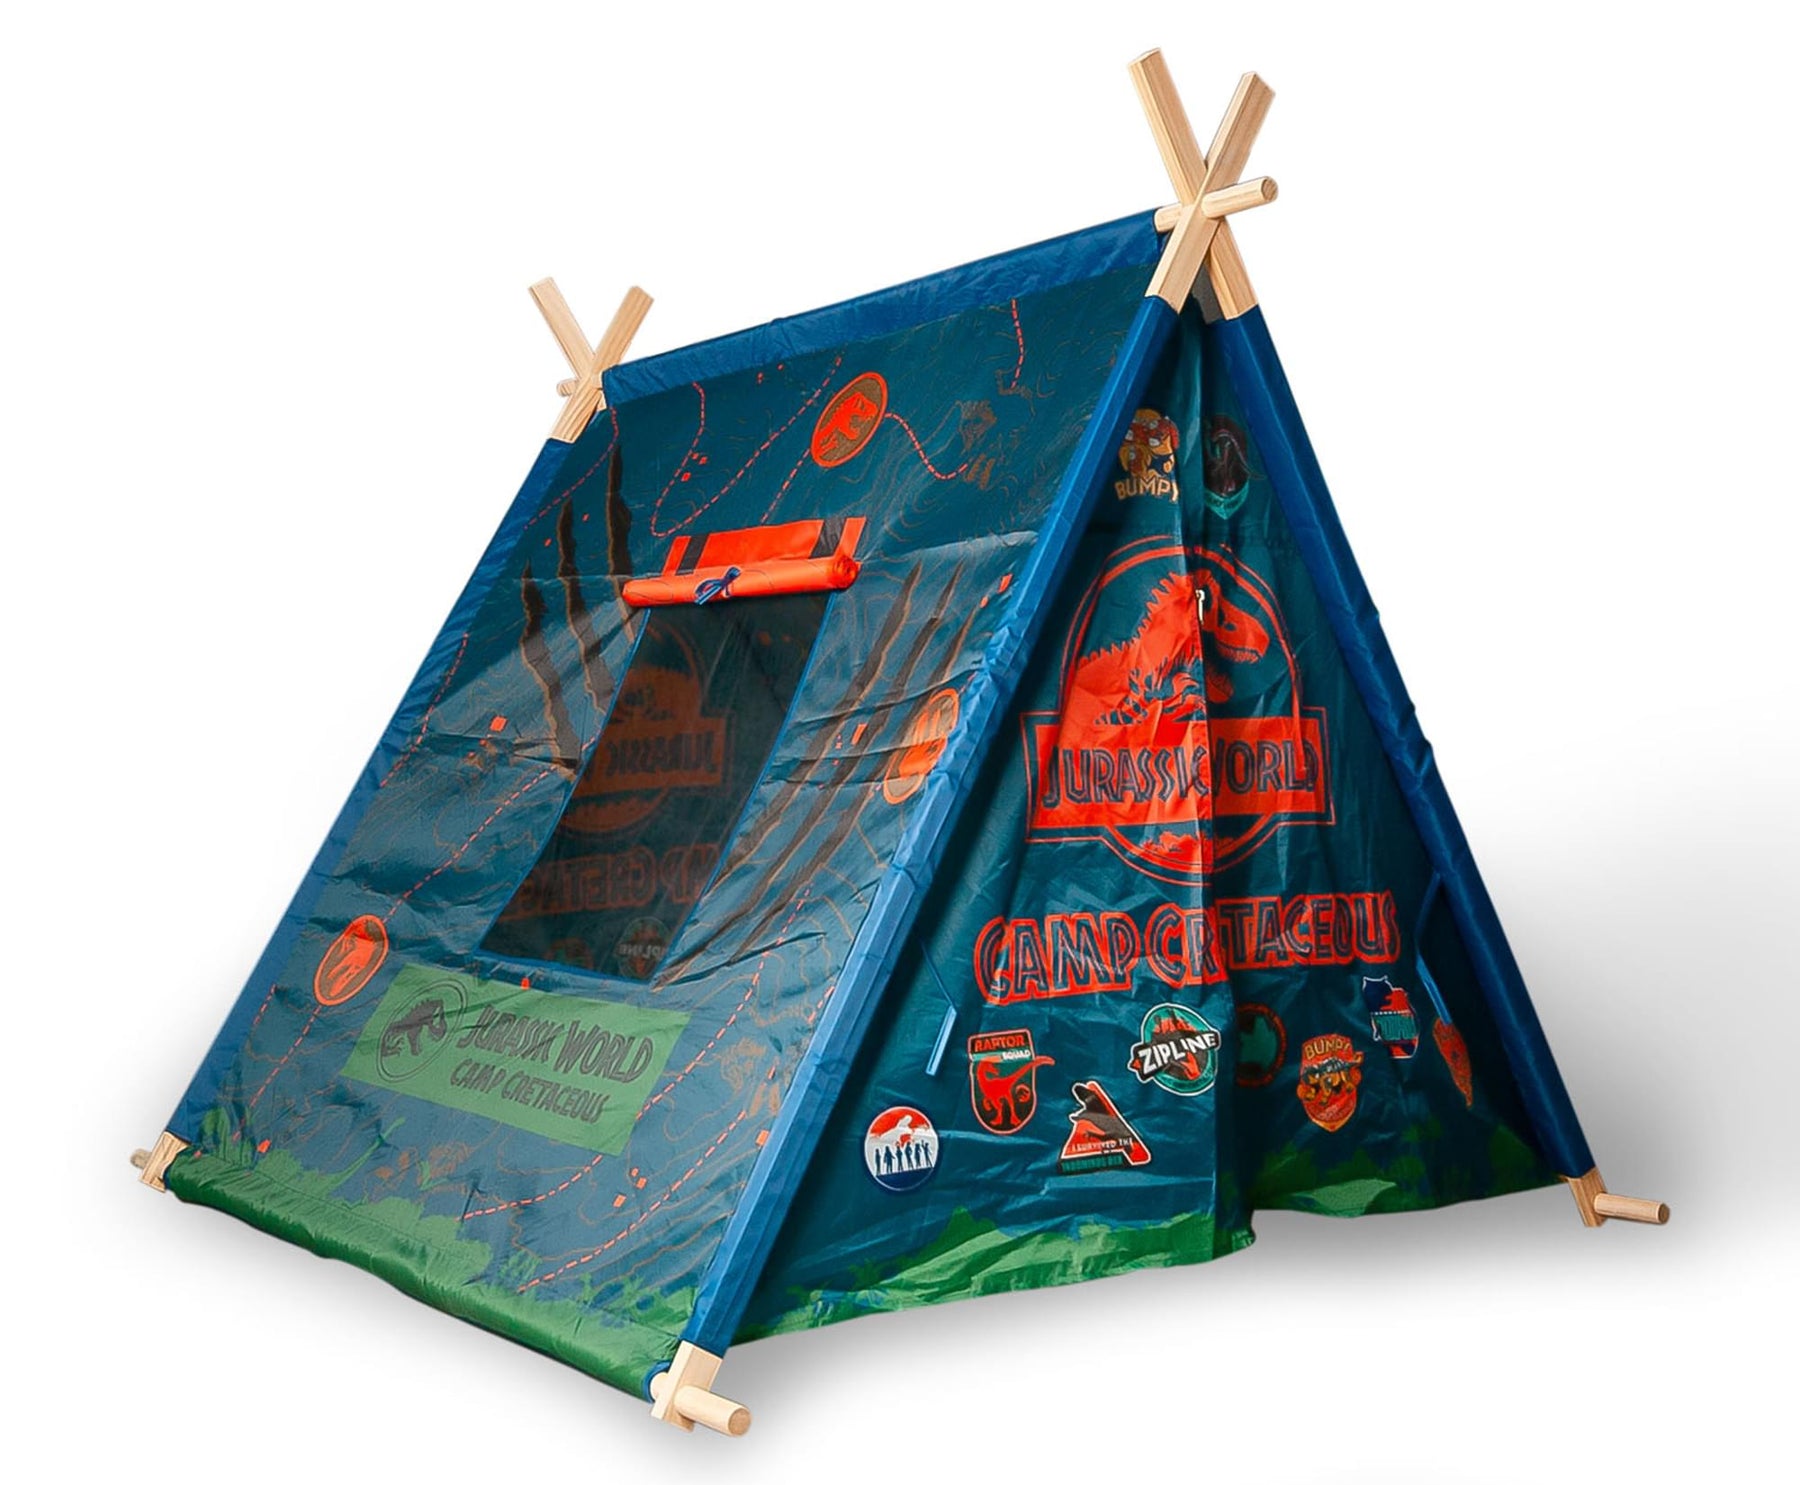 Jurassic World: Camp Cretaceous Indoor Teepee Tent Canopy